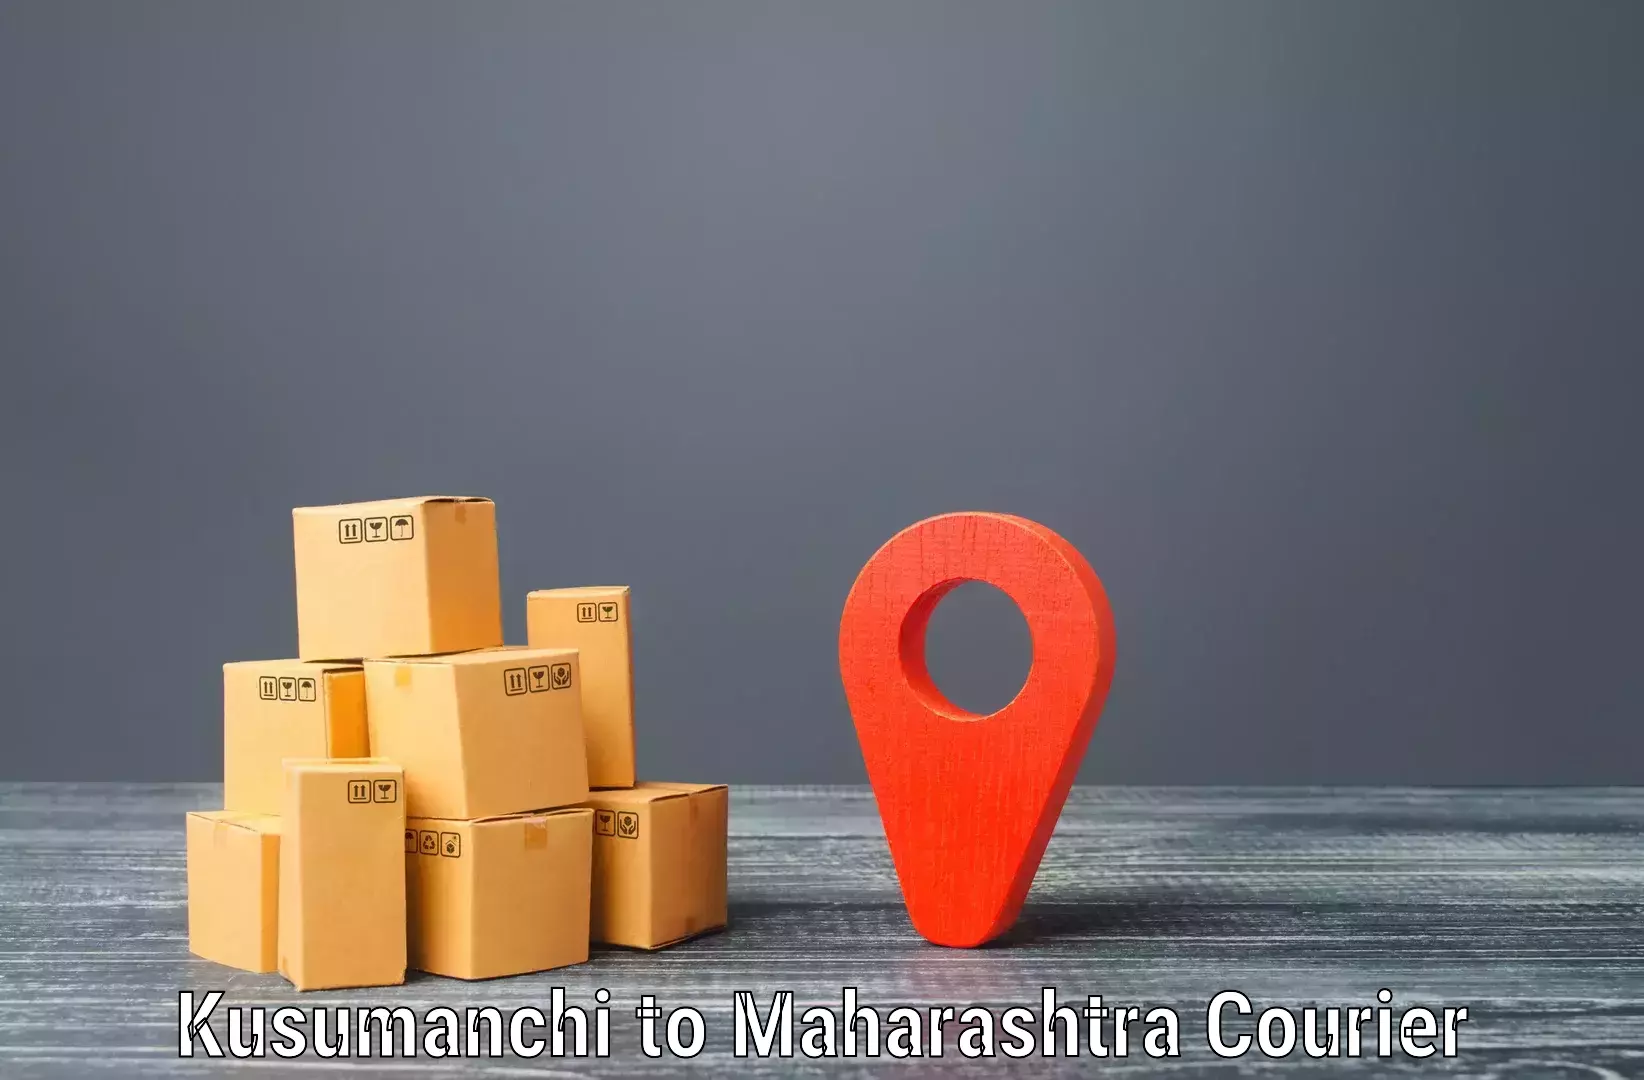 Shipping and handling in Kusumanchi to Chinchbunder